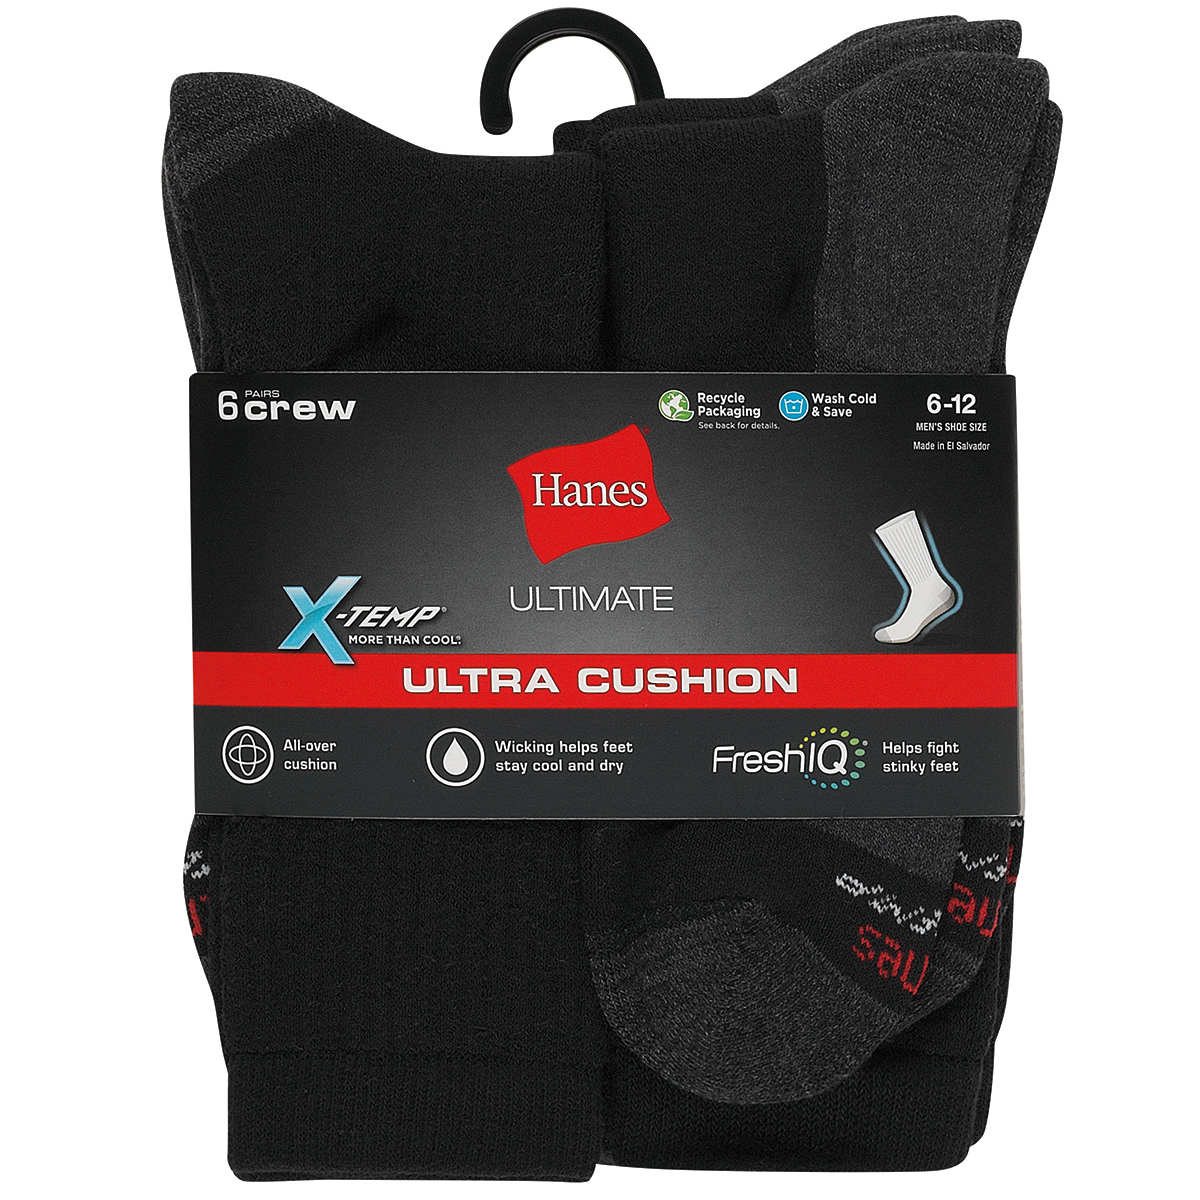 Hanes Men's Ultimate X-Temp Ultra Cushion Crew Socks, 6 Pack